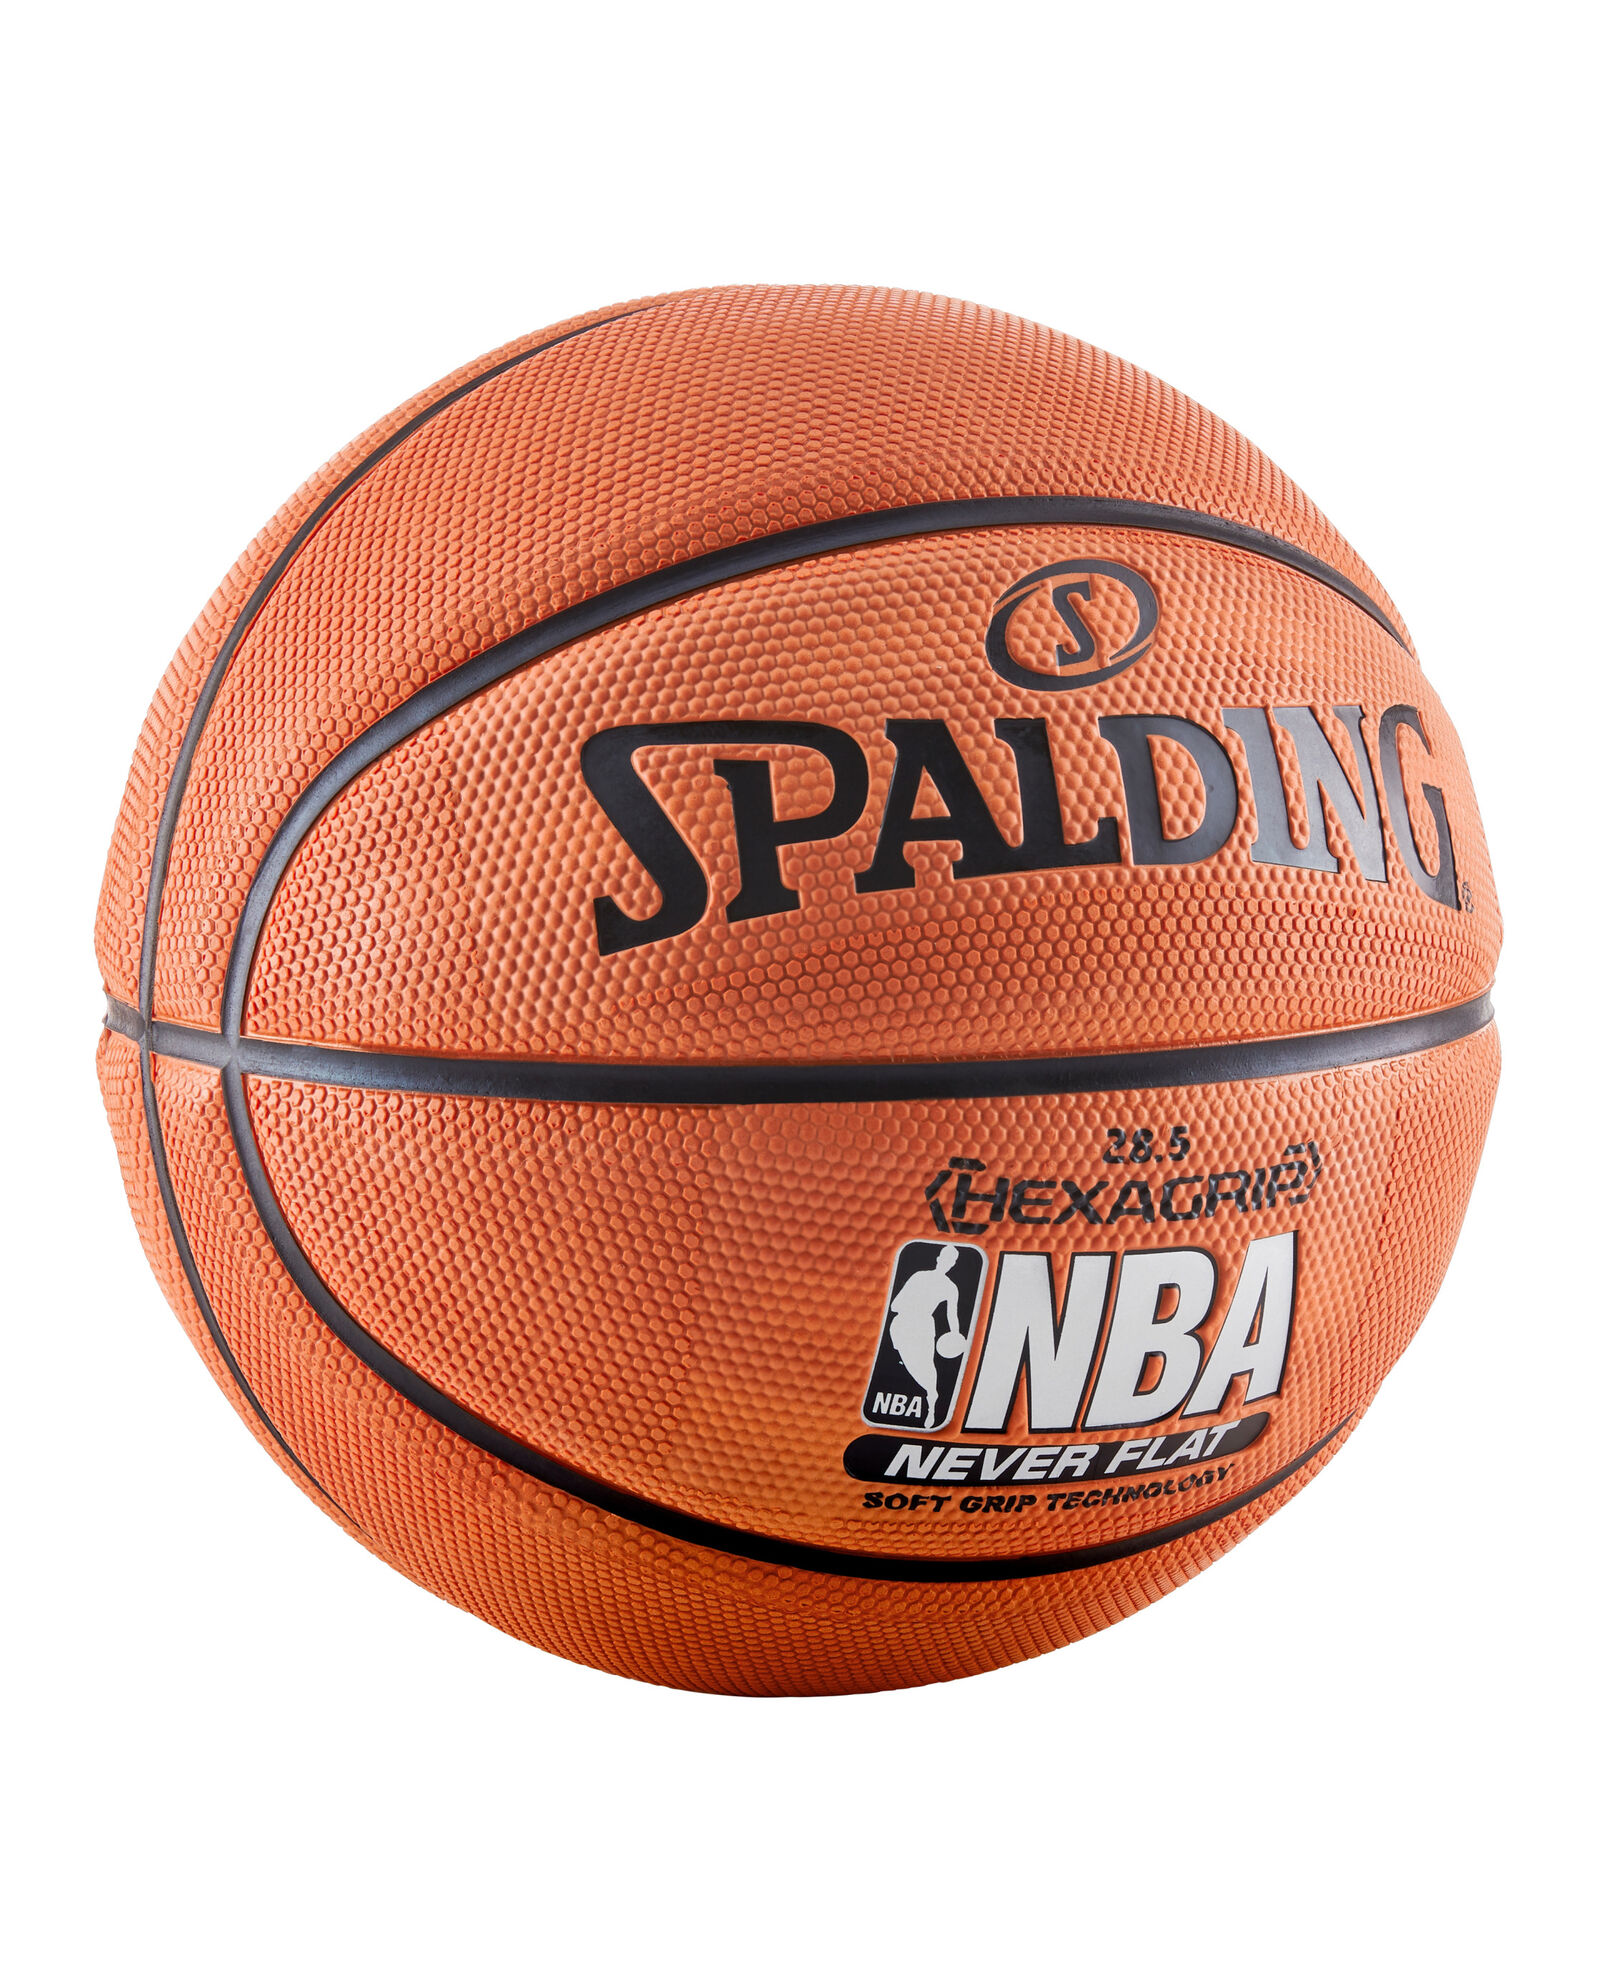 Spalding NBA Neverflat® Hexagrip™ Indoor-Outdoor Basketball